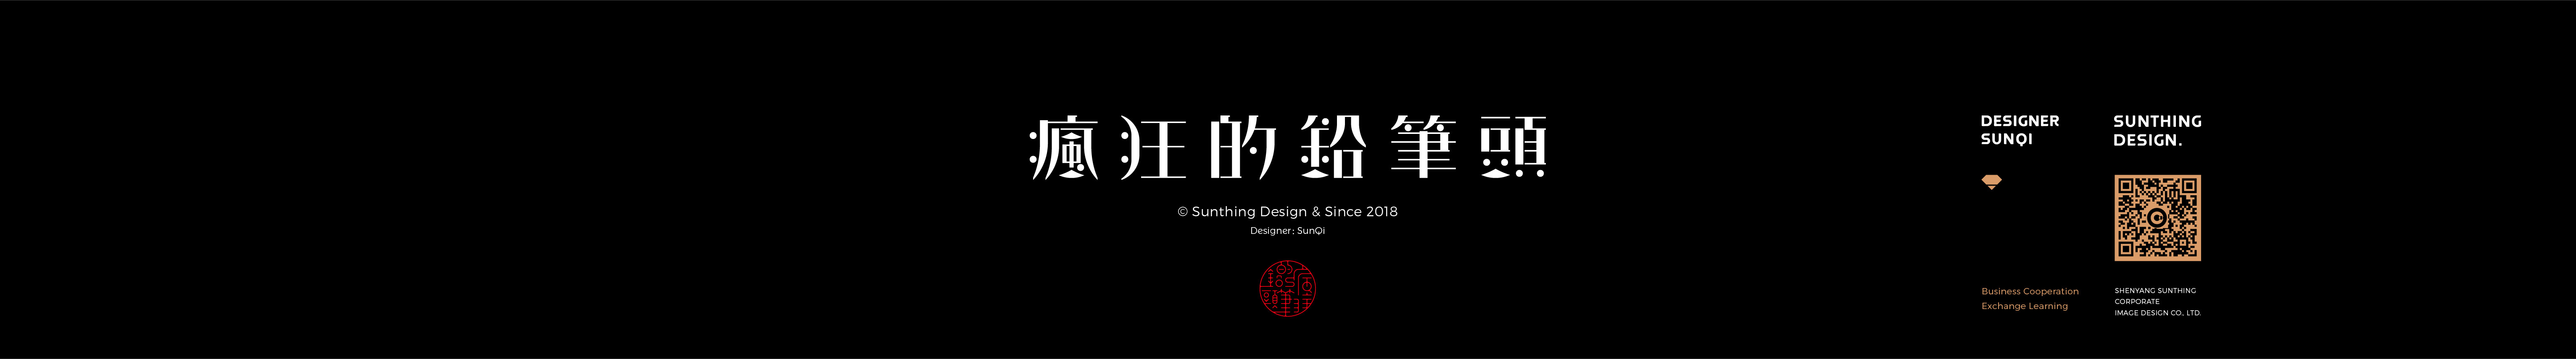 Banner de perfil de Sunthing Sun